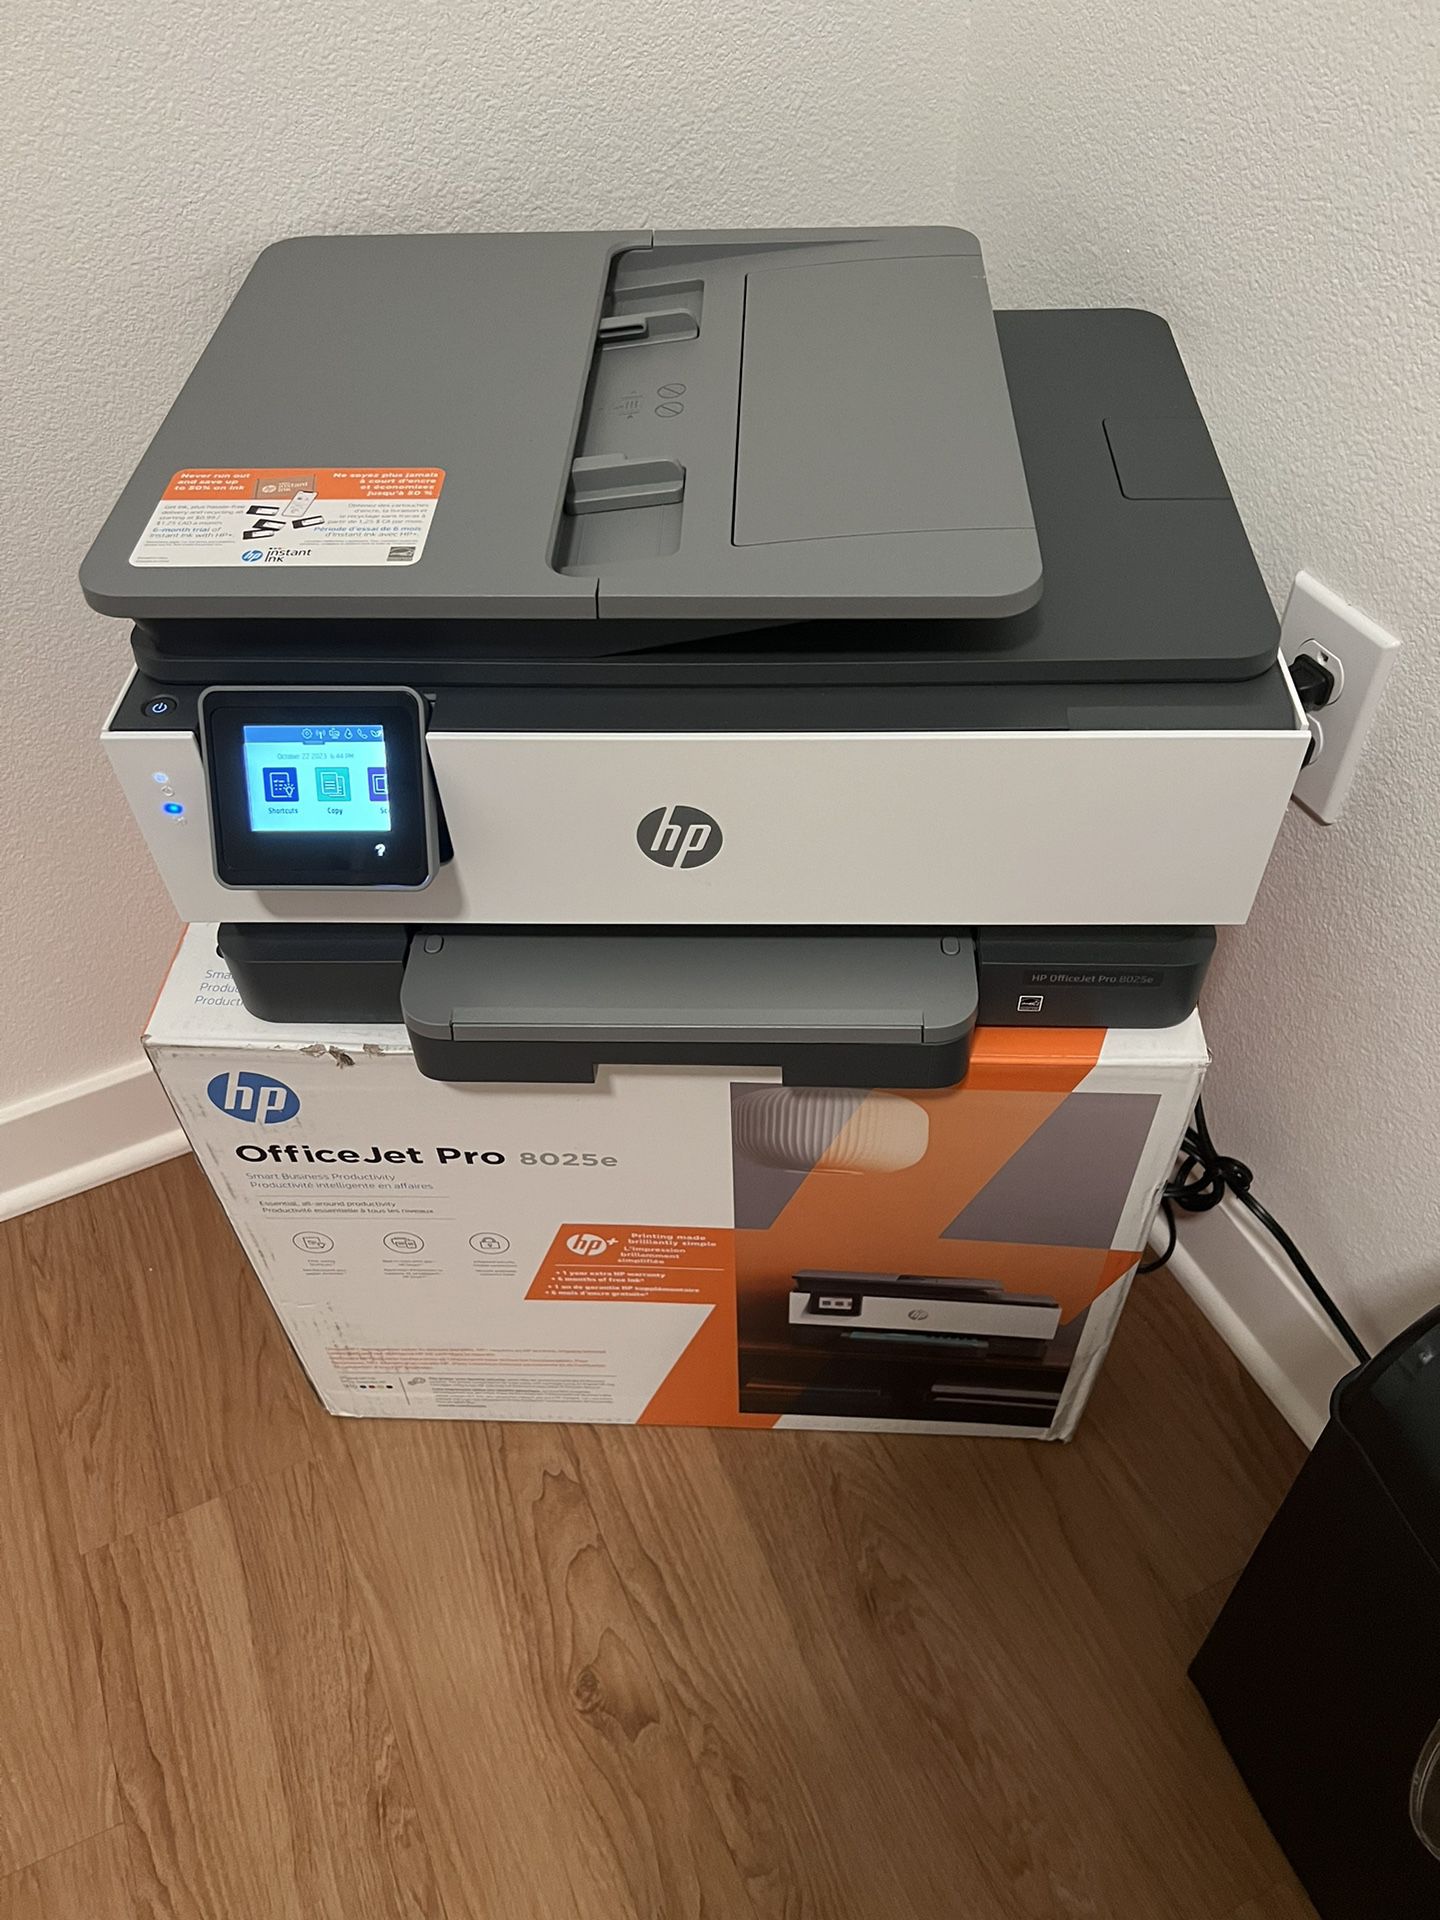 Hp Printer, Scanner And Fax Machine 